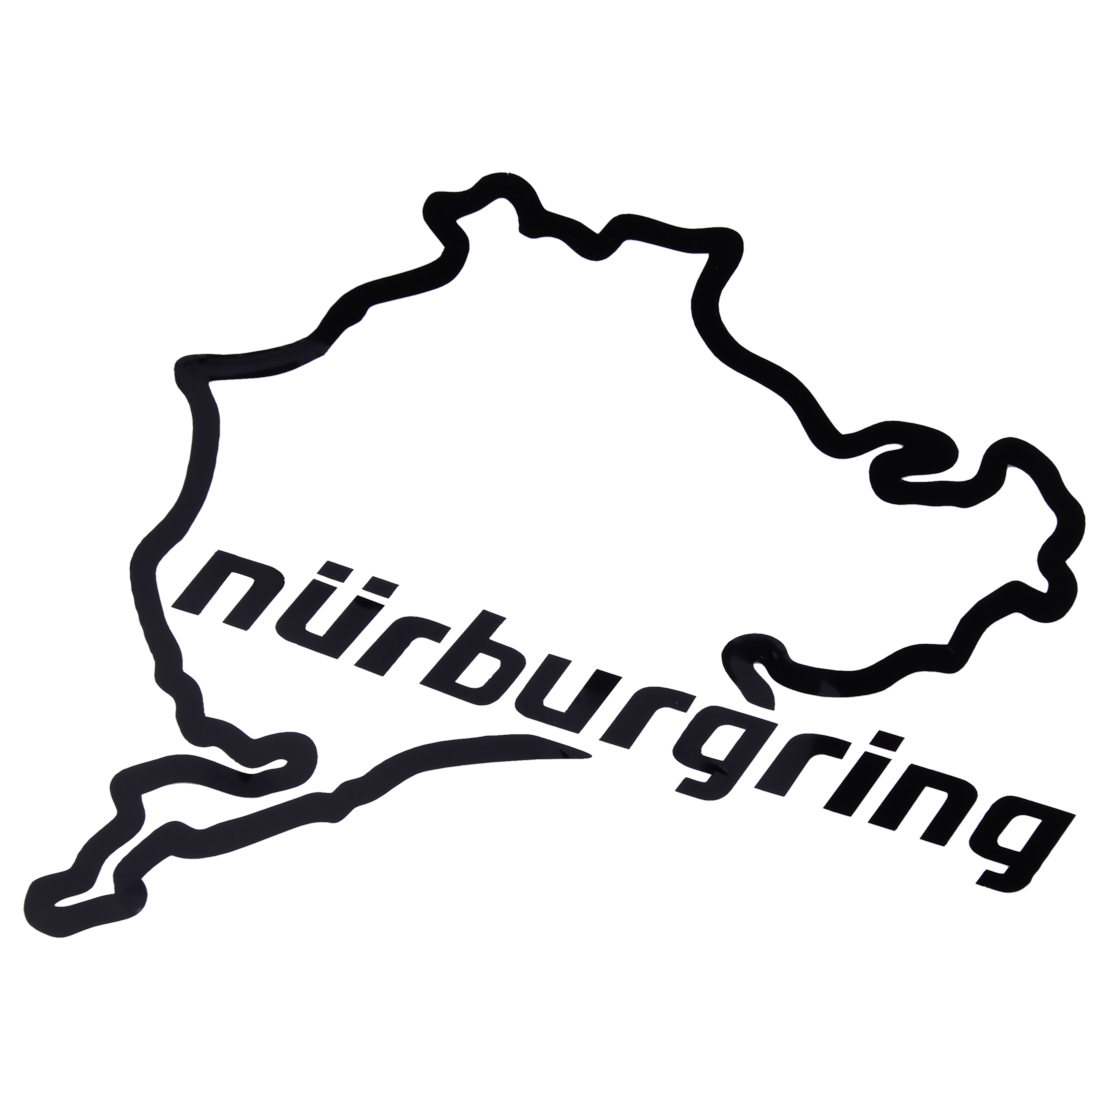 Nurburgring Vinyl Decal Sticker Car Sticker truck Window bumper laptop tablet 6" 